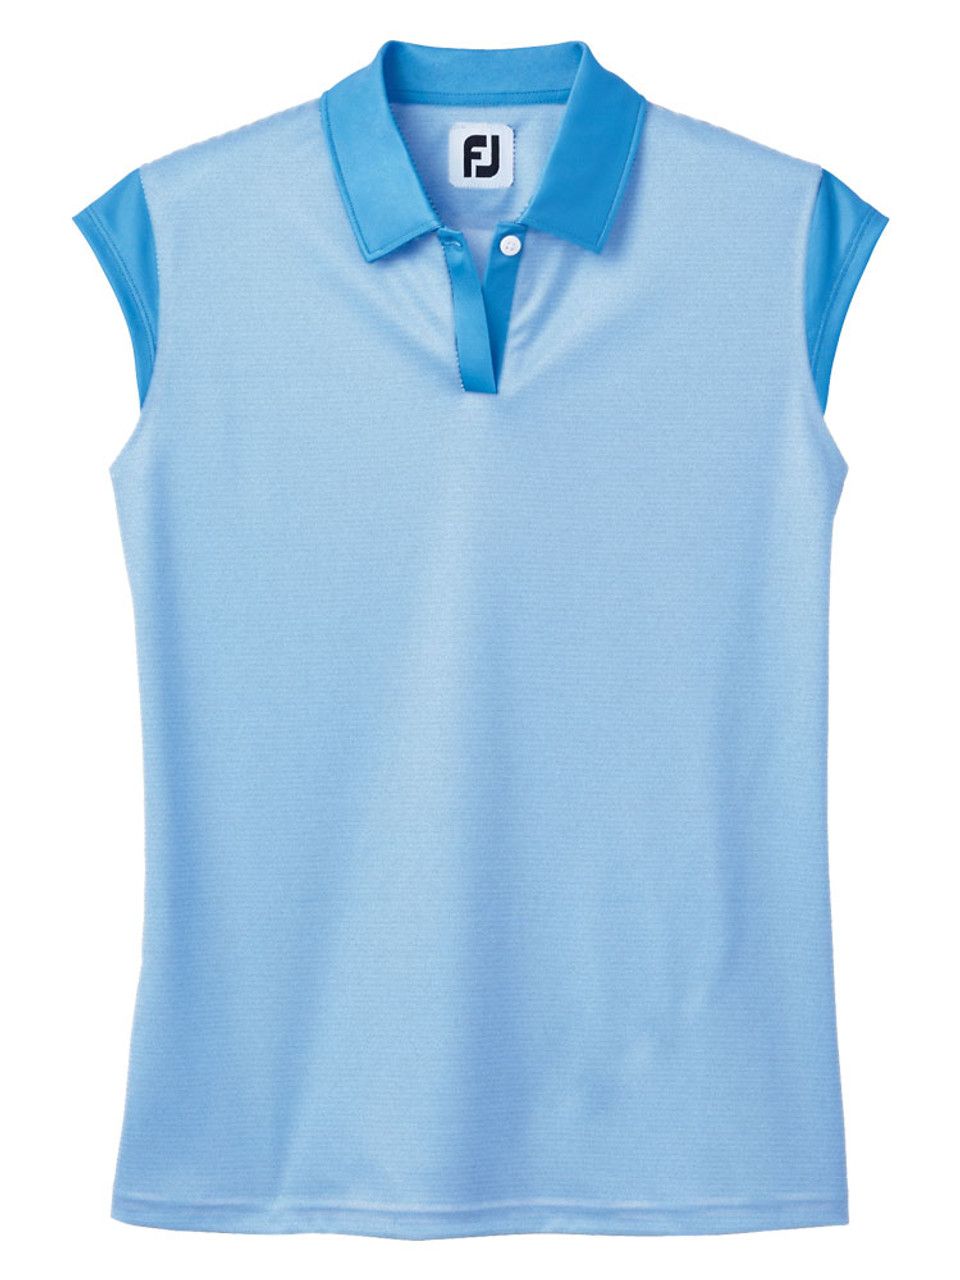 FootJoy Women's Cap Sleeve Pinstripe Golf Shirt - Blue Jay